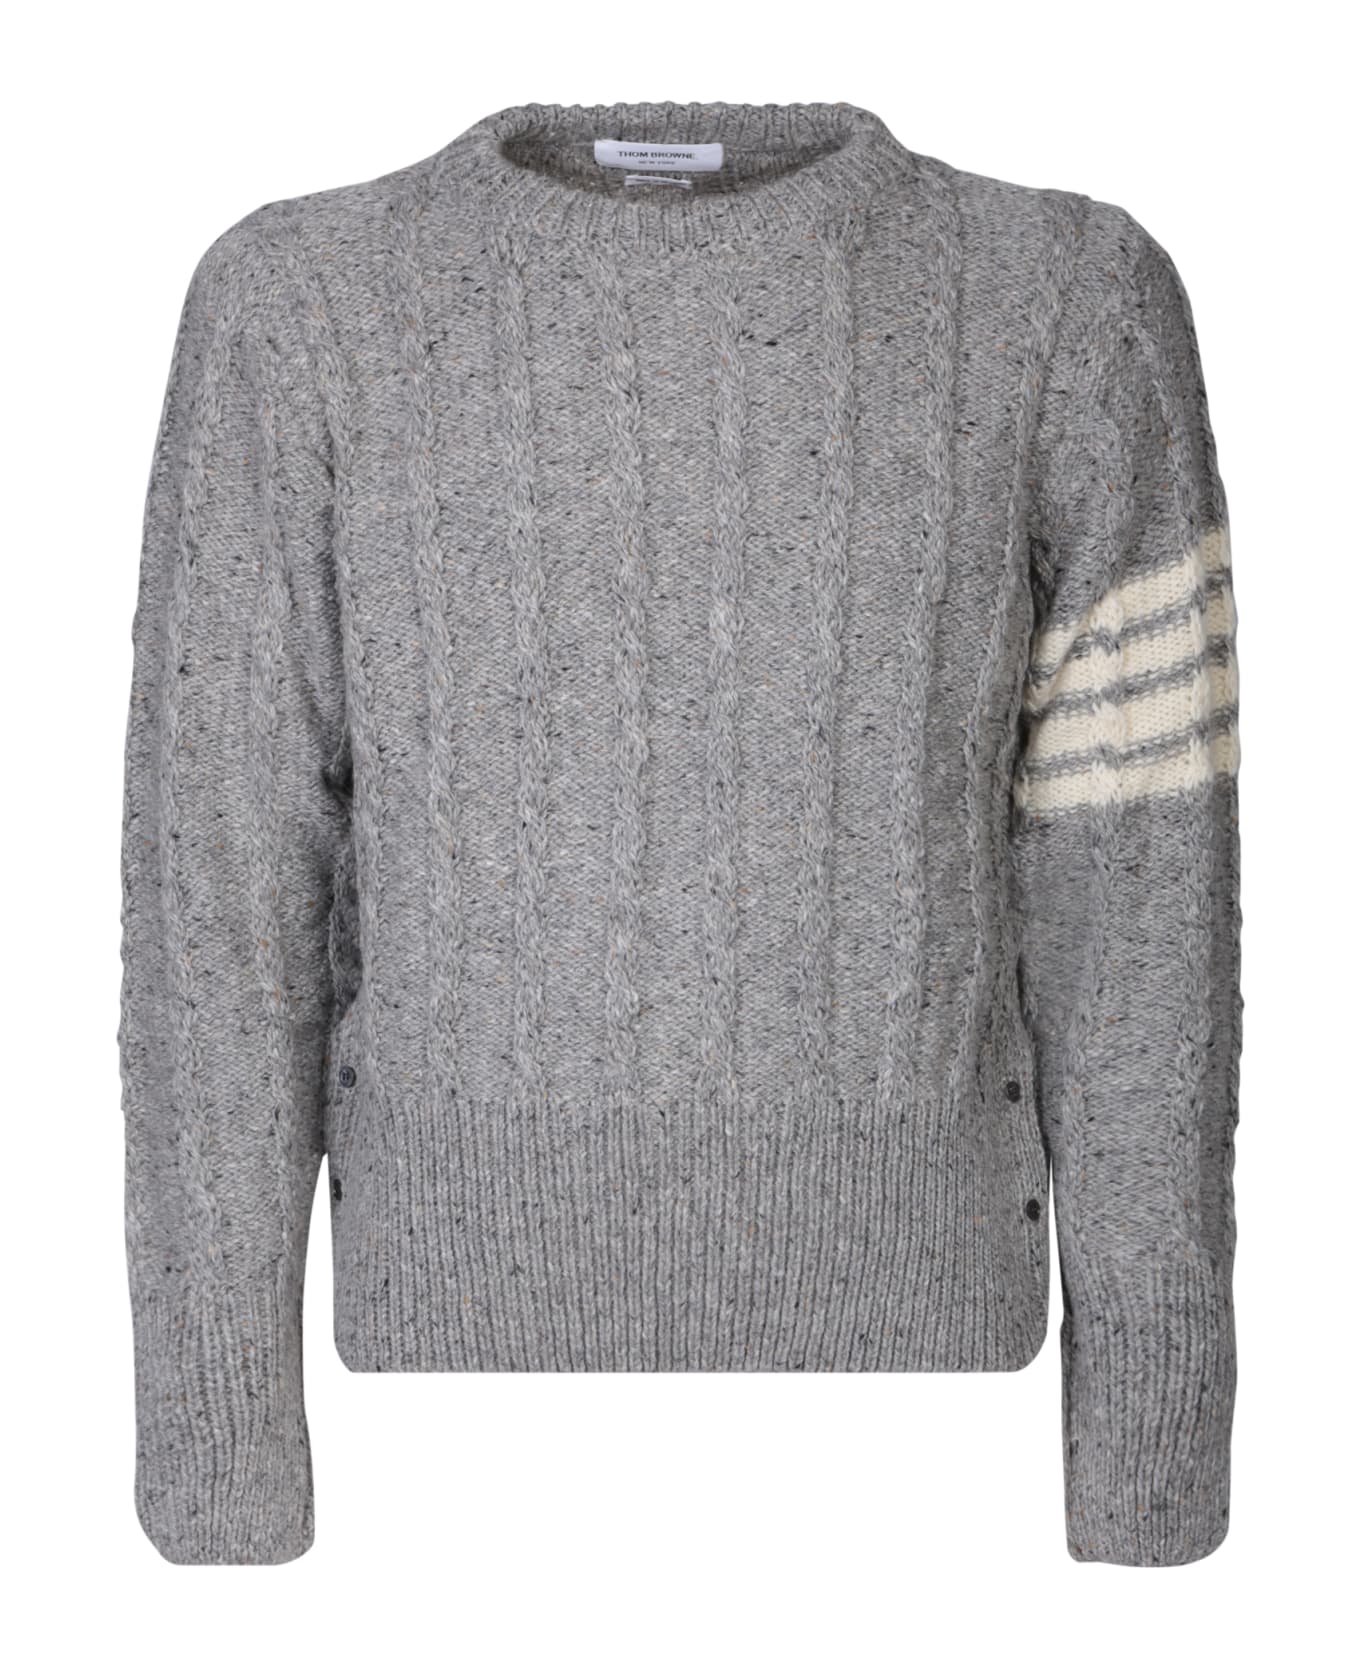 Thom Browne '4 Bar' Sweater - Grey